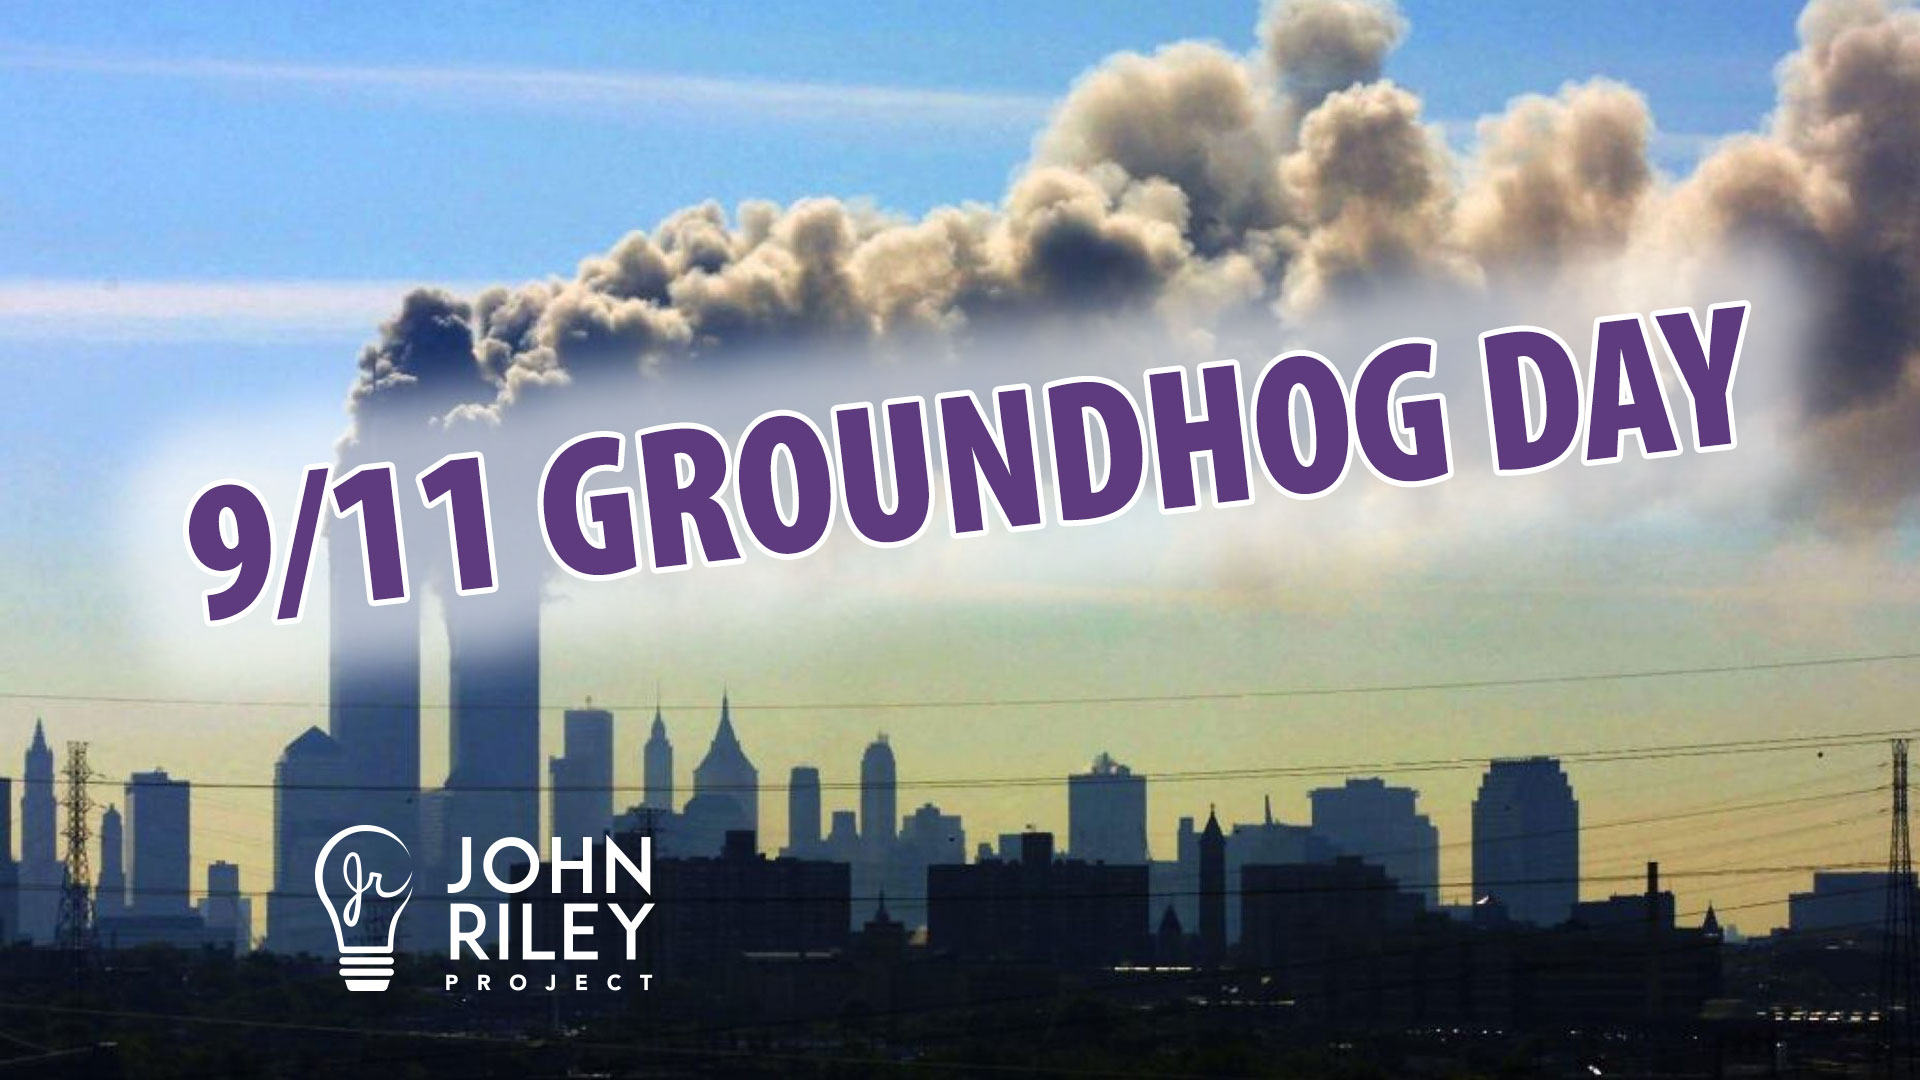 911 Groundhog Day, John Riley Project, JRP0159